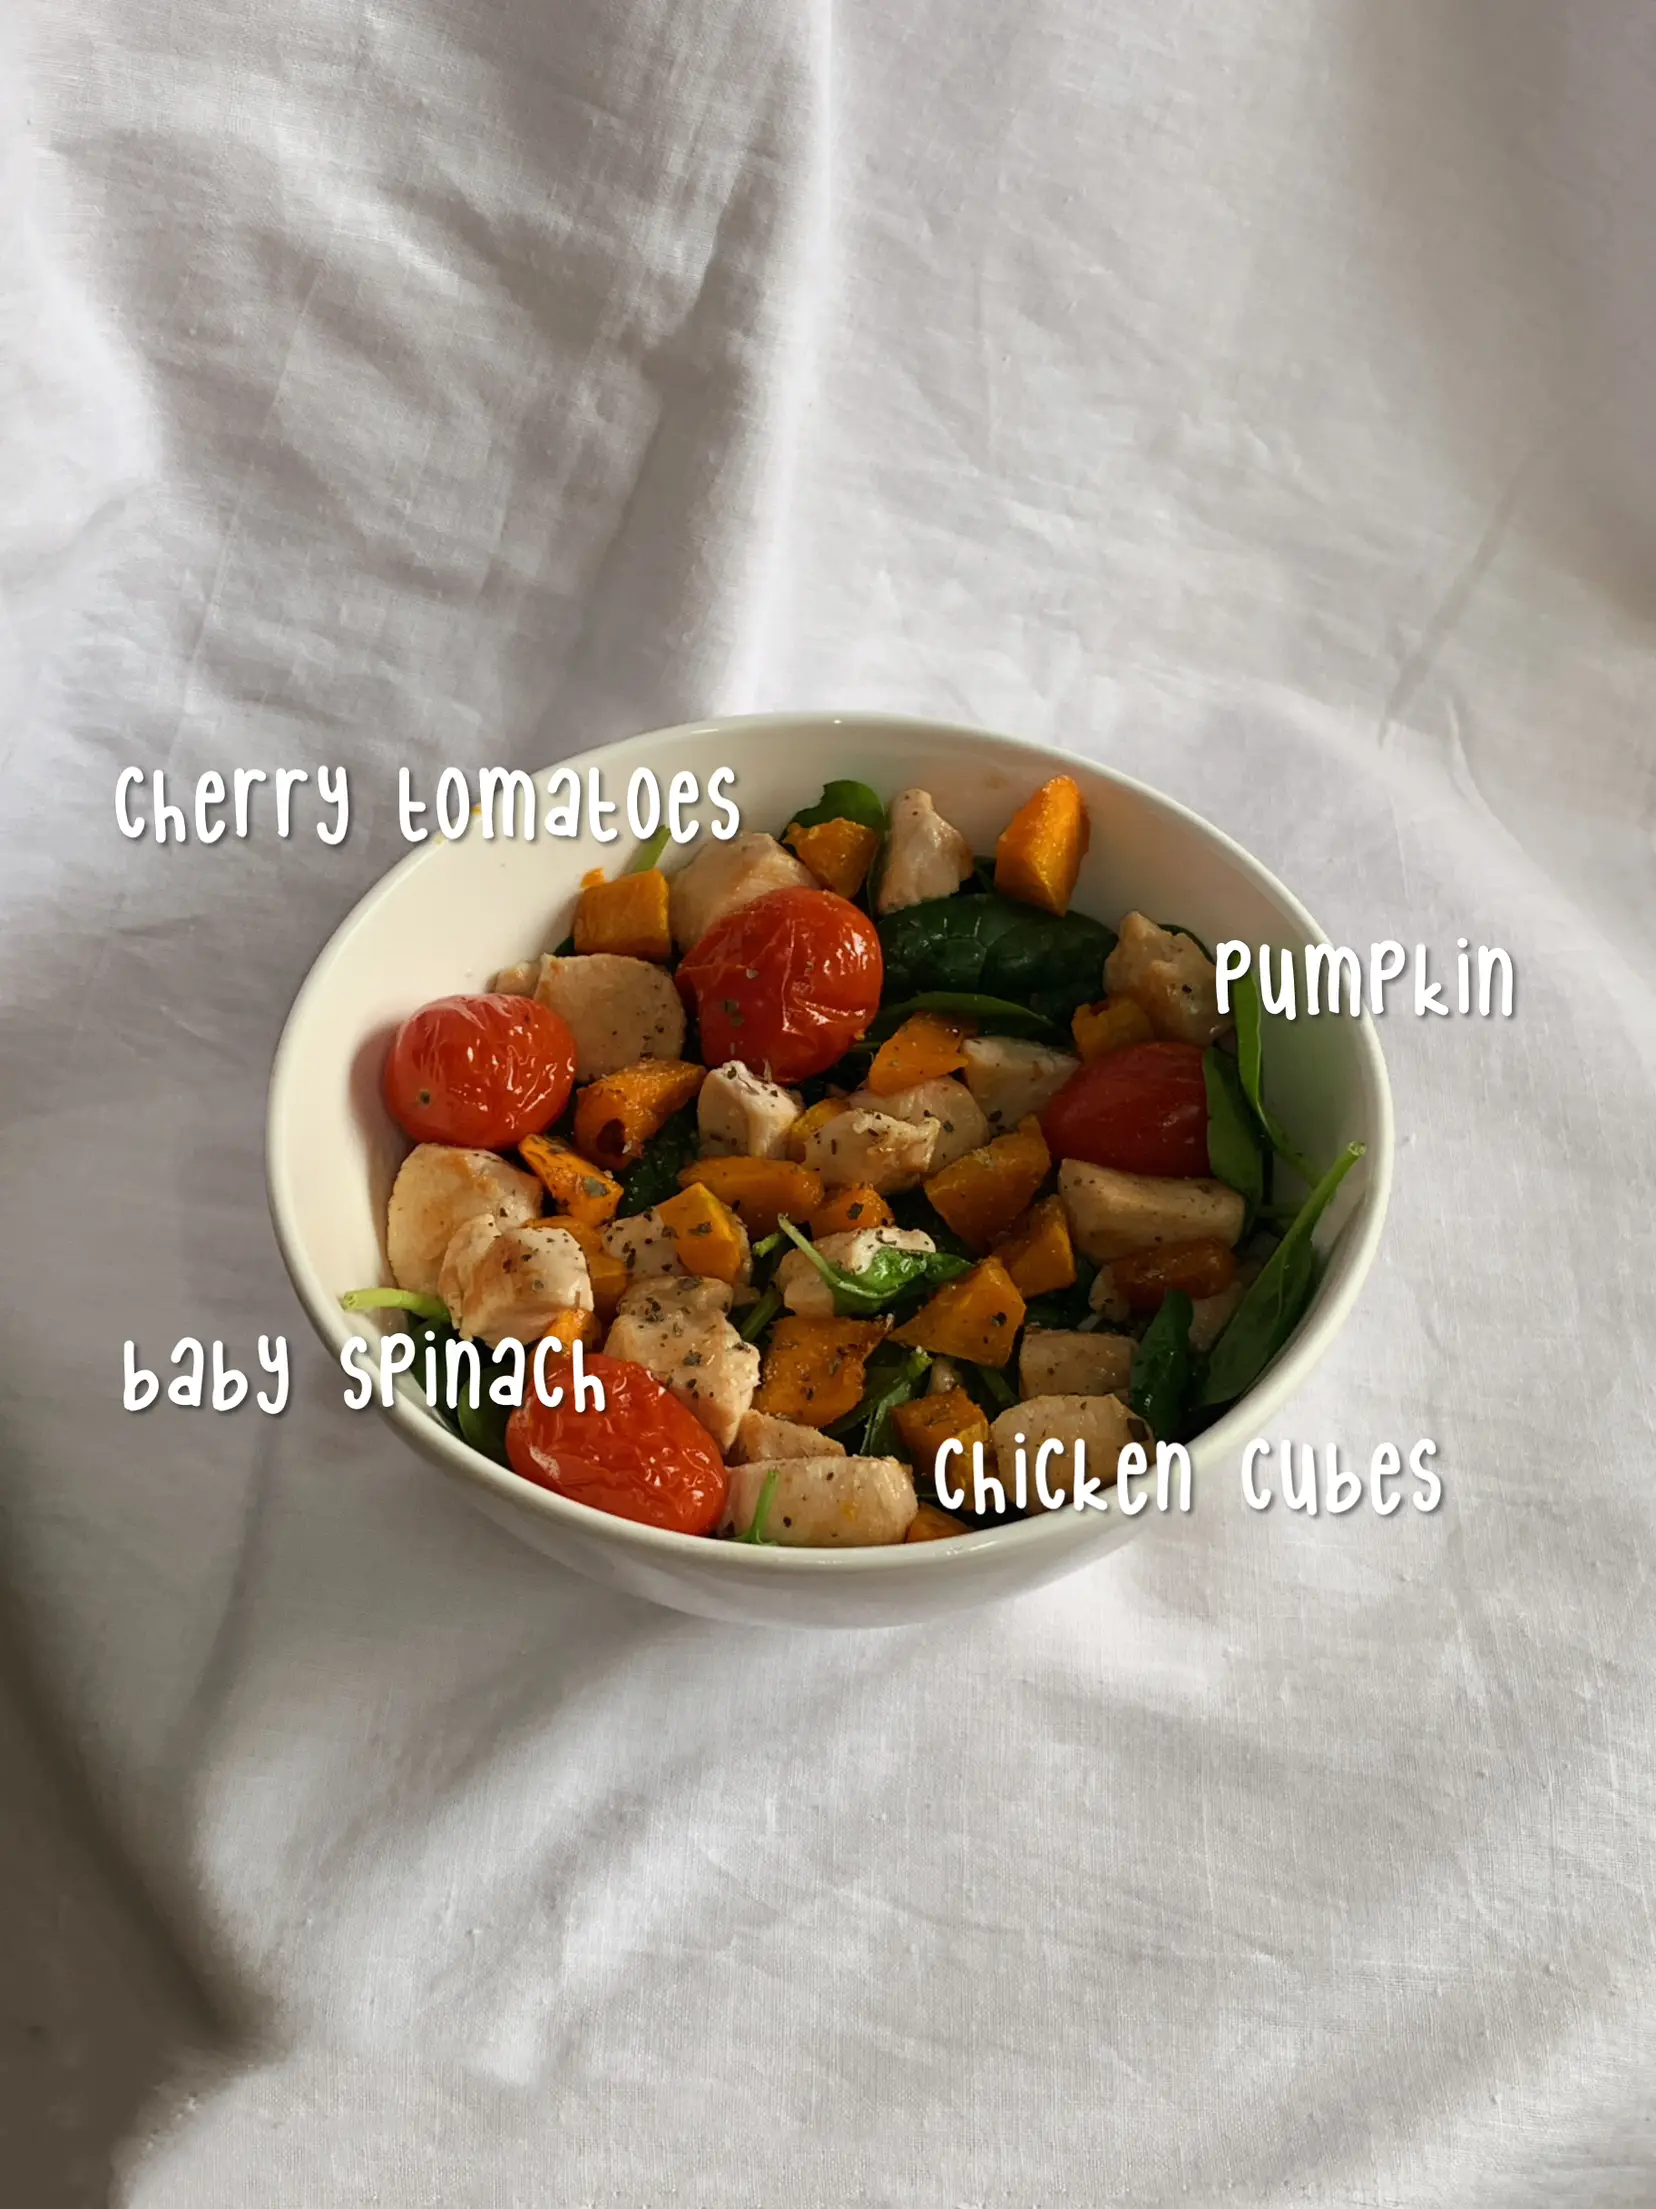 Colourful salad bowl